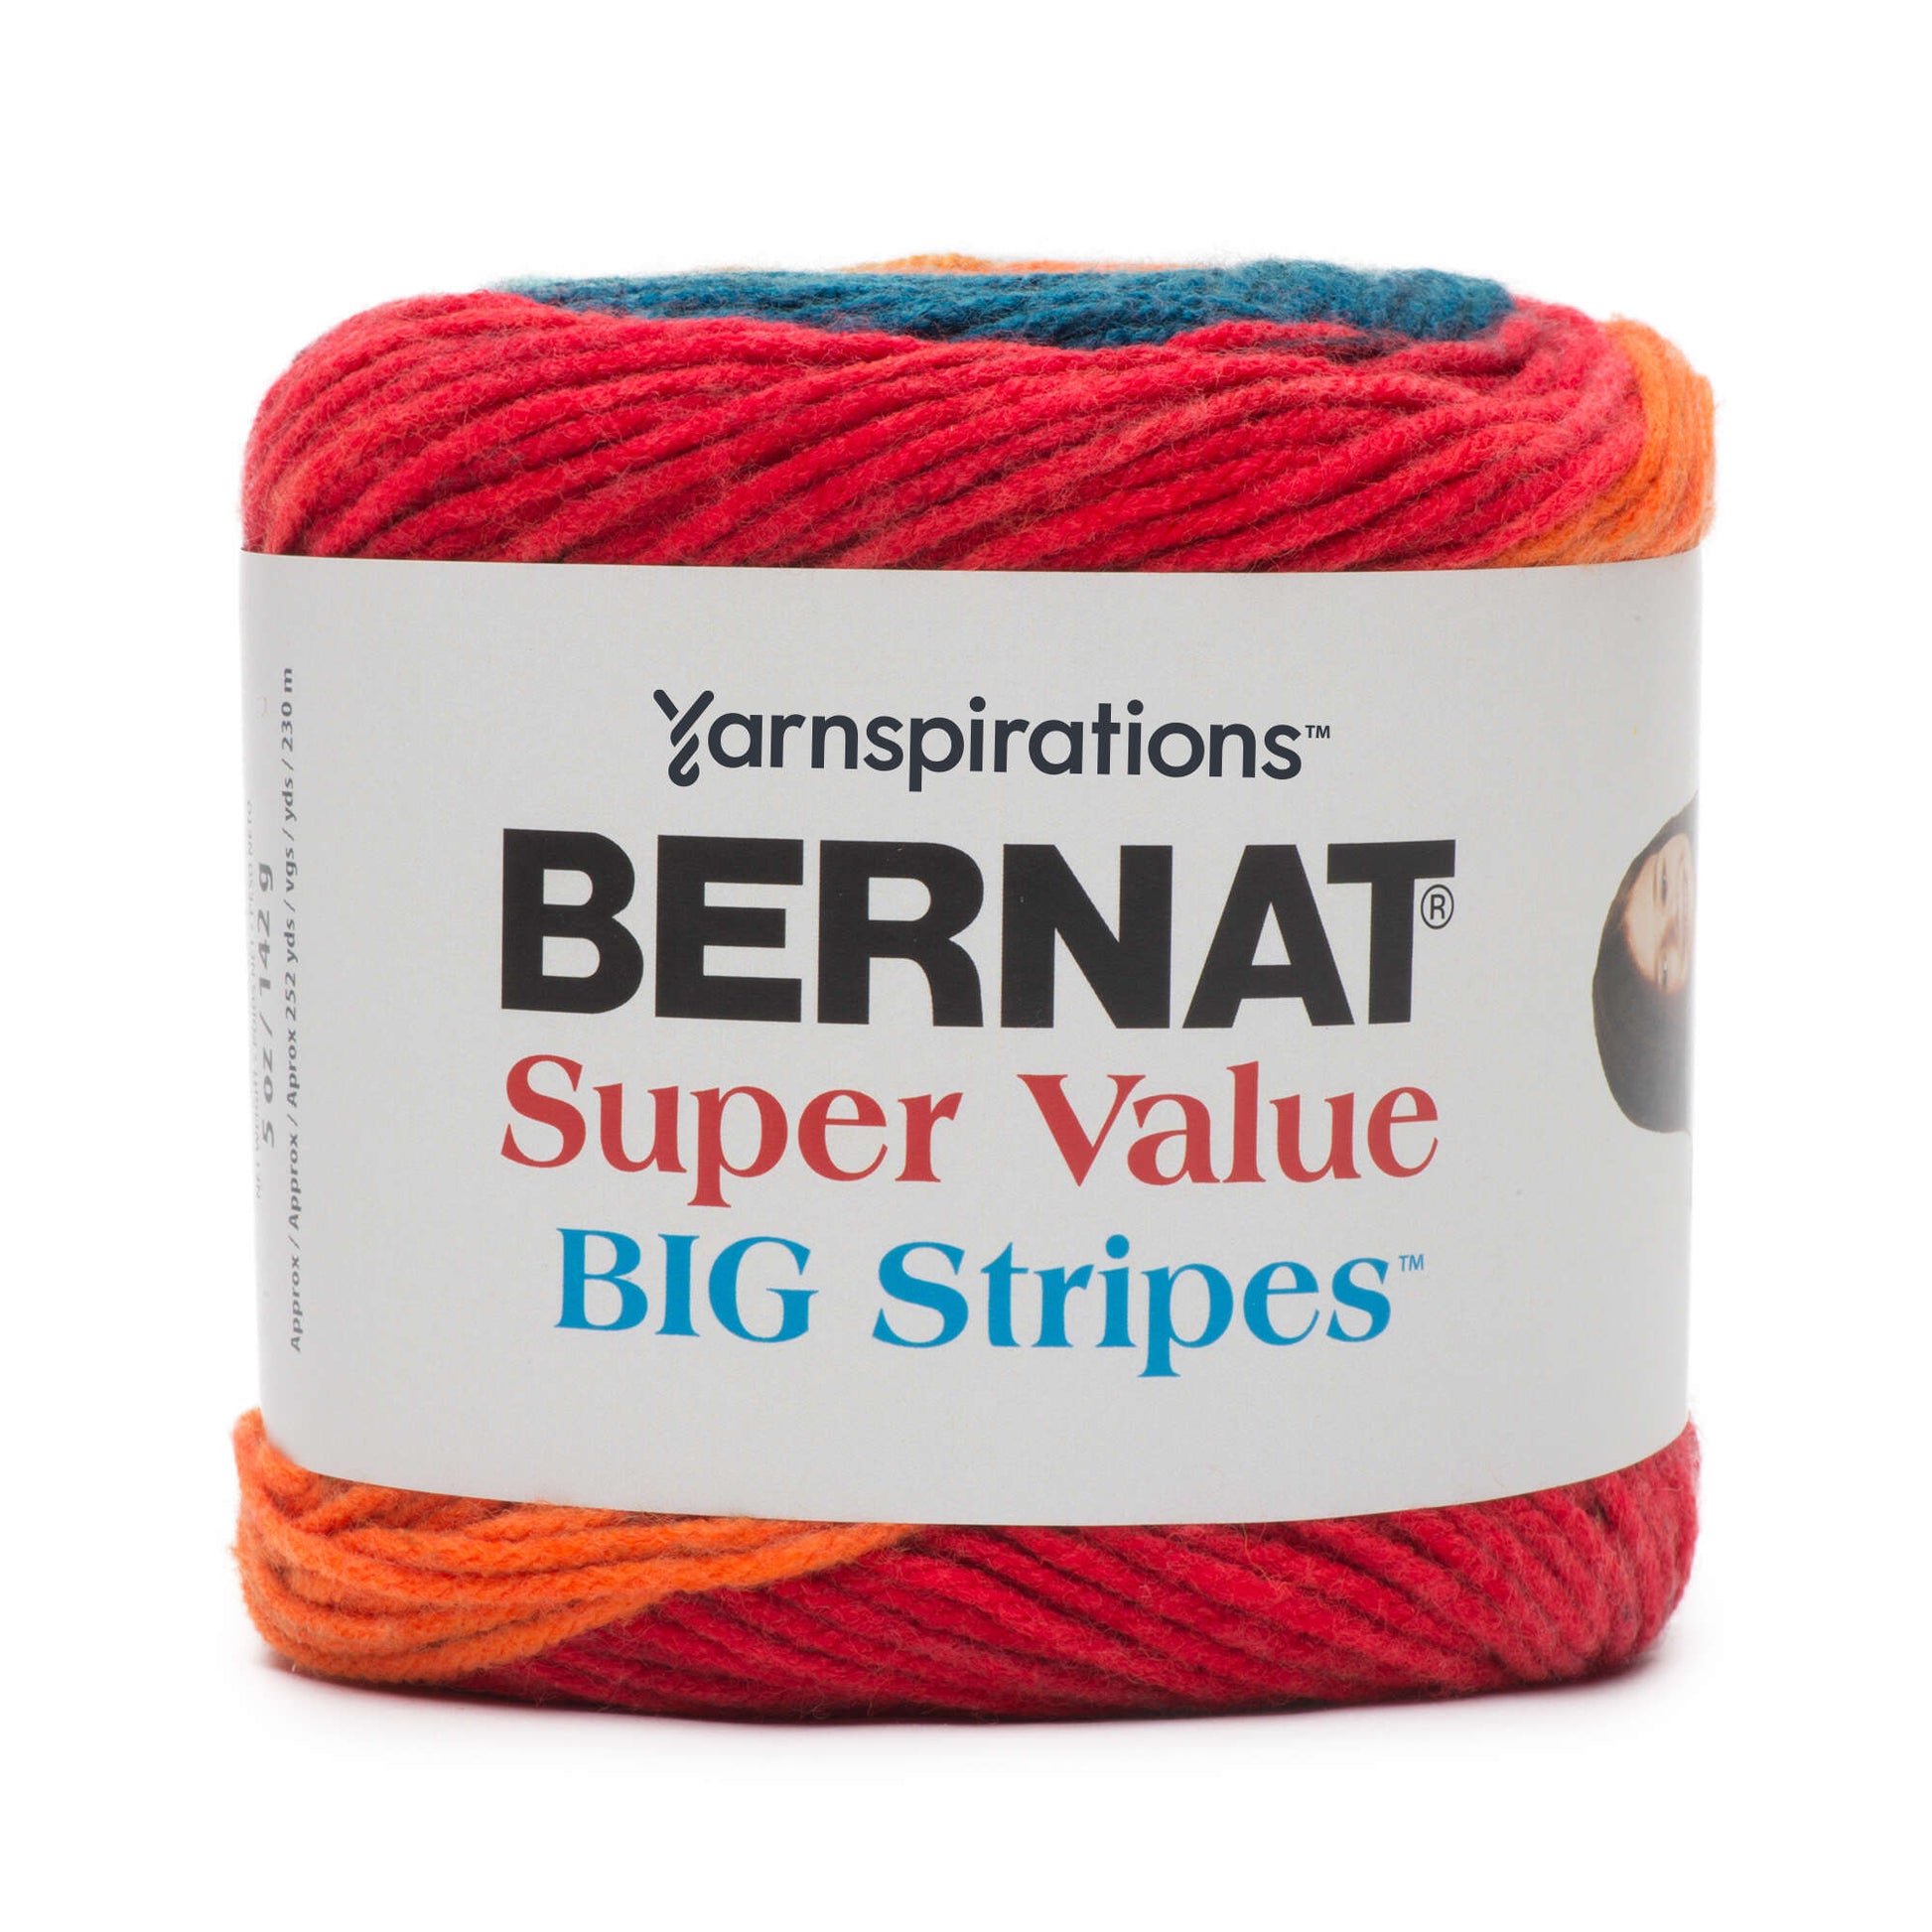 Bernat Super Value Big Stripes Yarn - Discontinued Shades Carnival